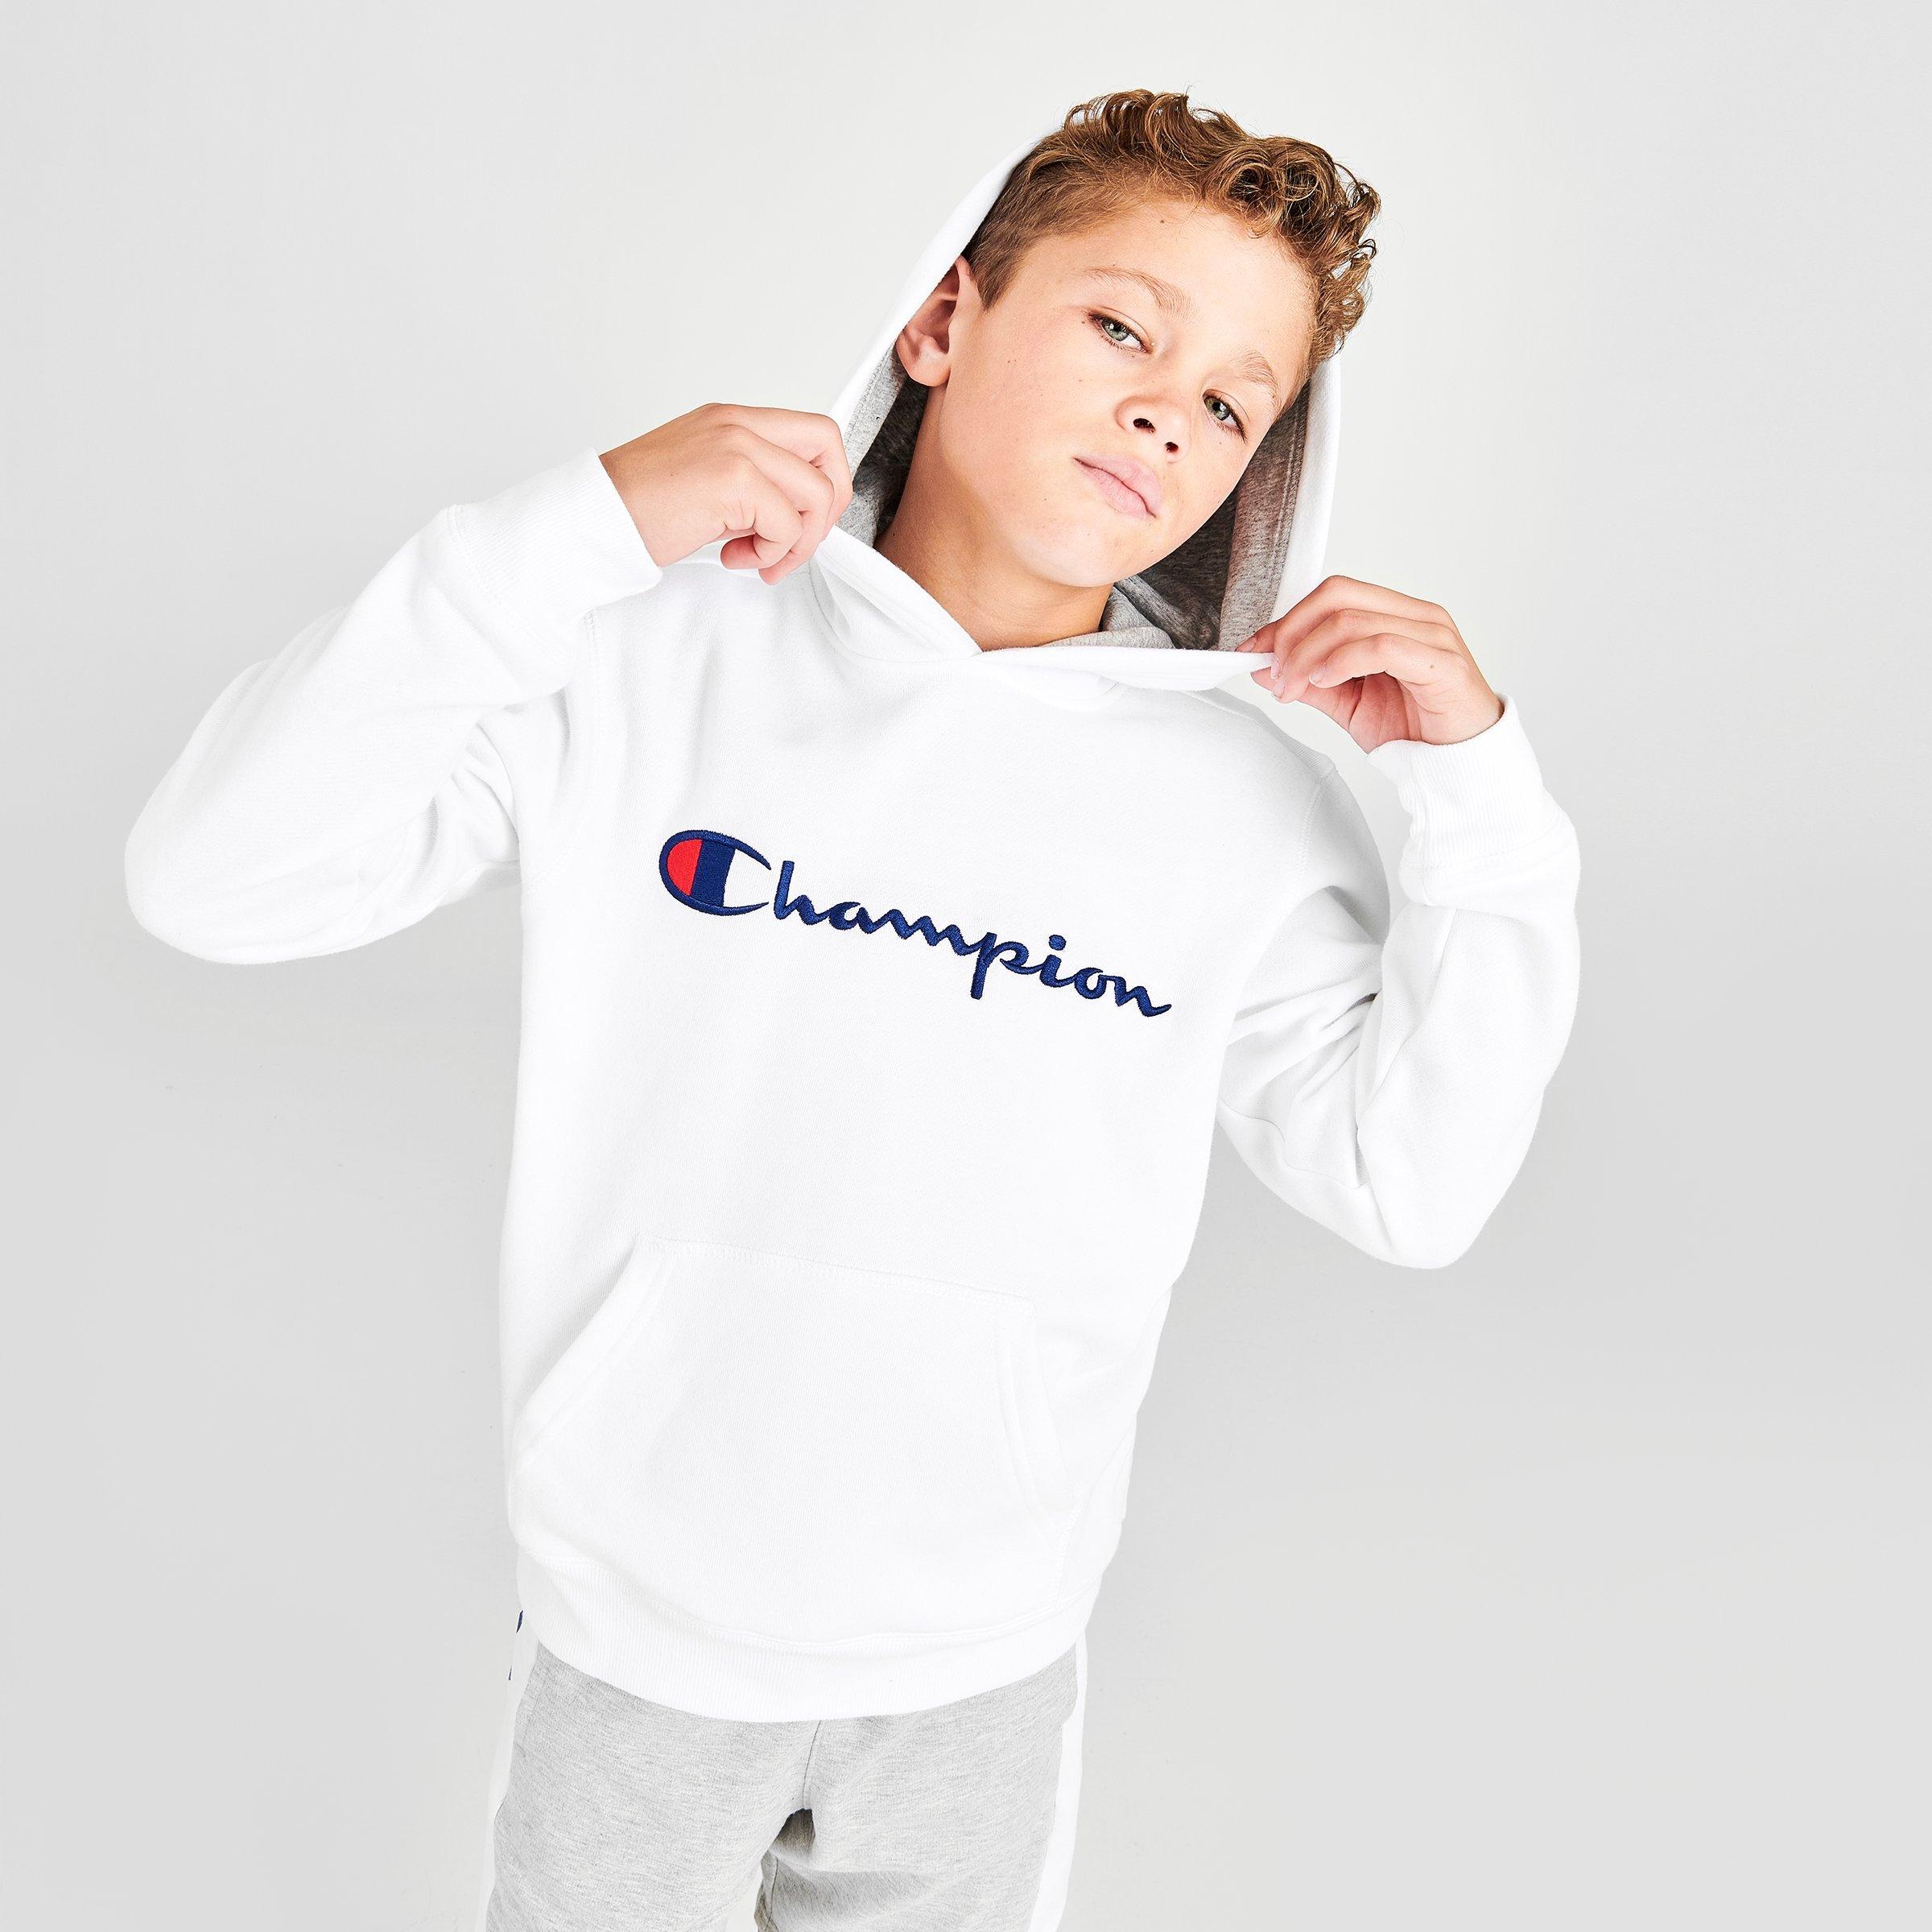 champion sweatshirt for kids